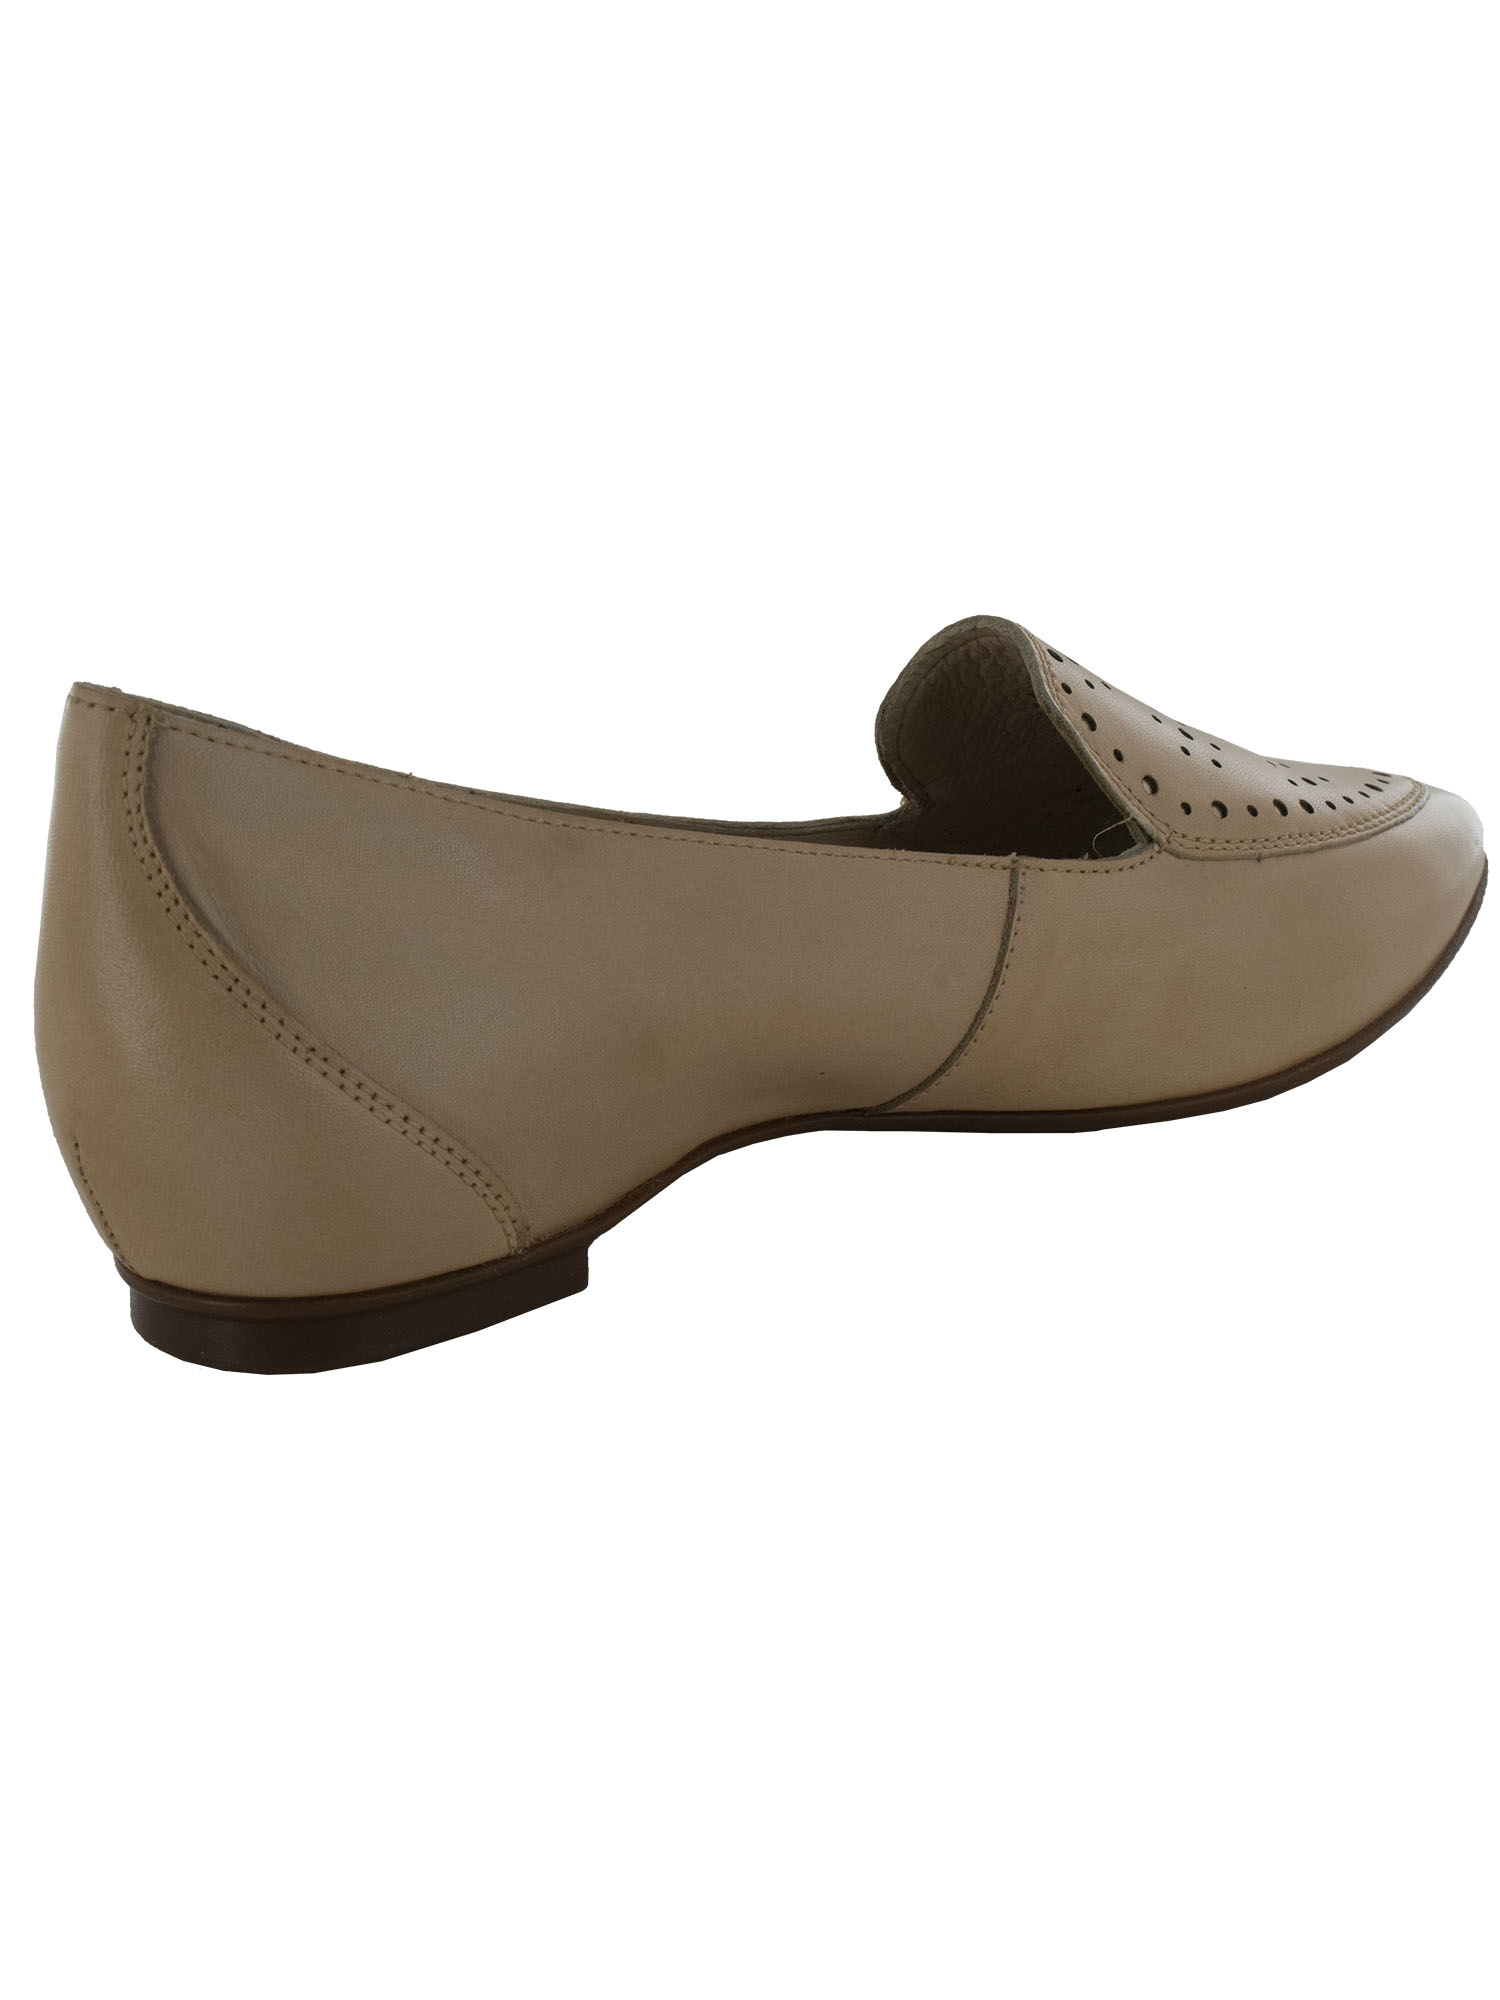 Pikolinos Womens La Marina W5L-4876 Loafer Shoes, Bamboo, 35 M EU / 4.5-5 M US - image 3 of 3